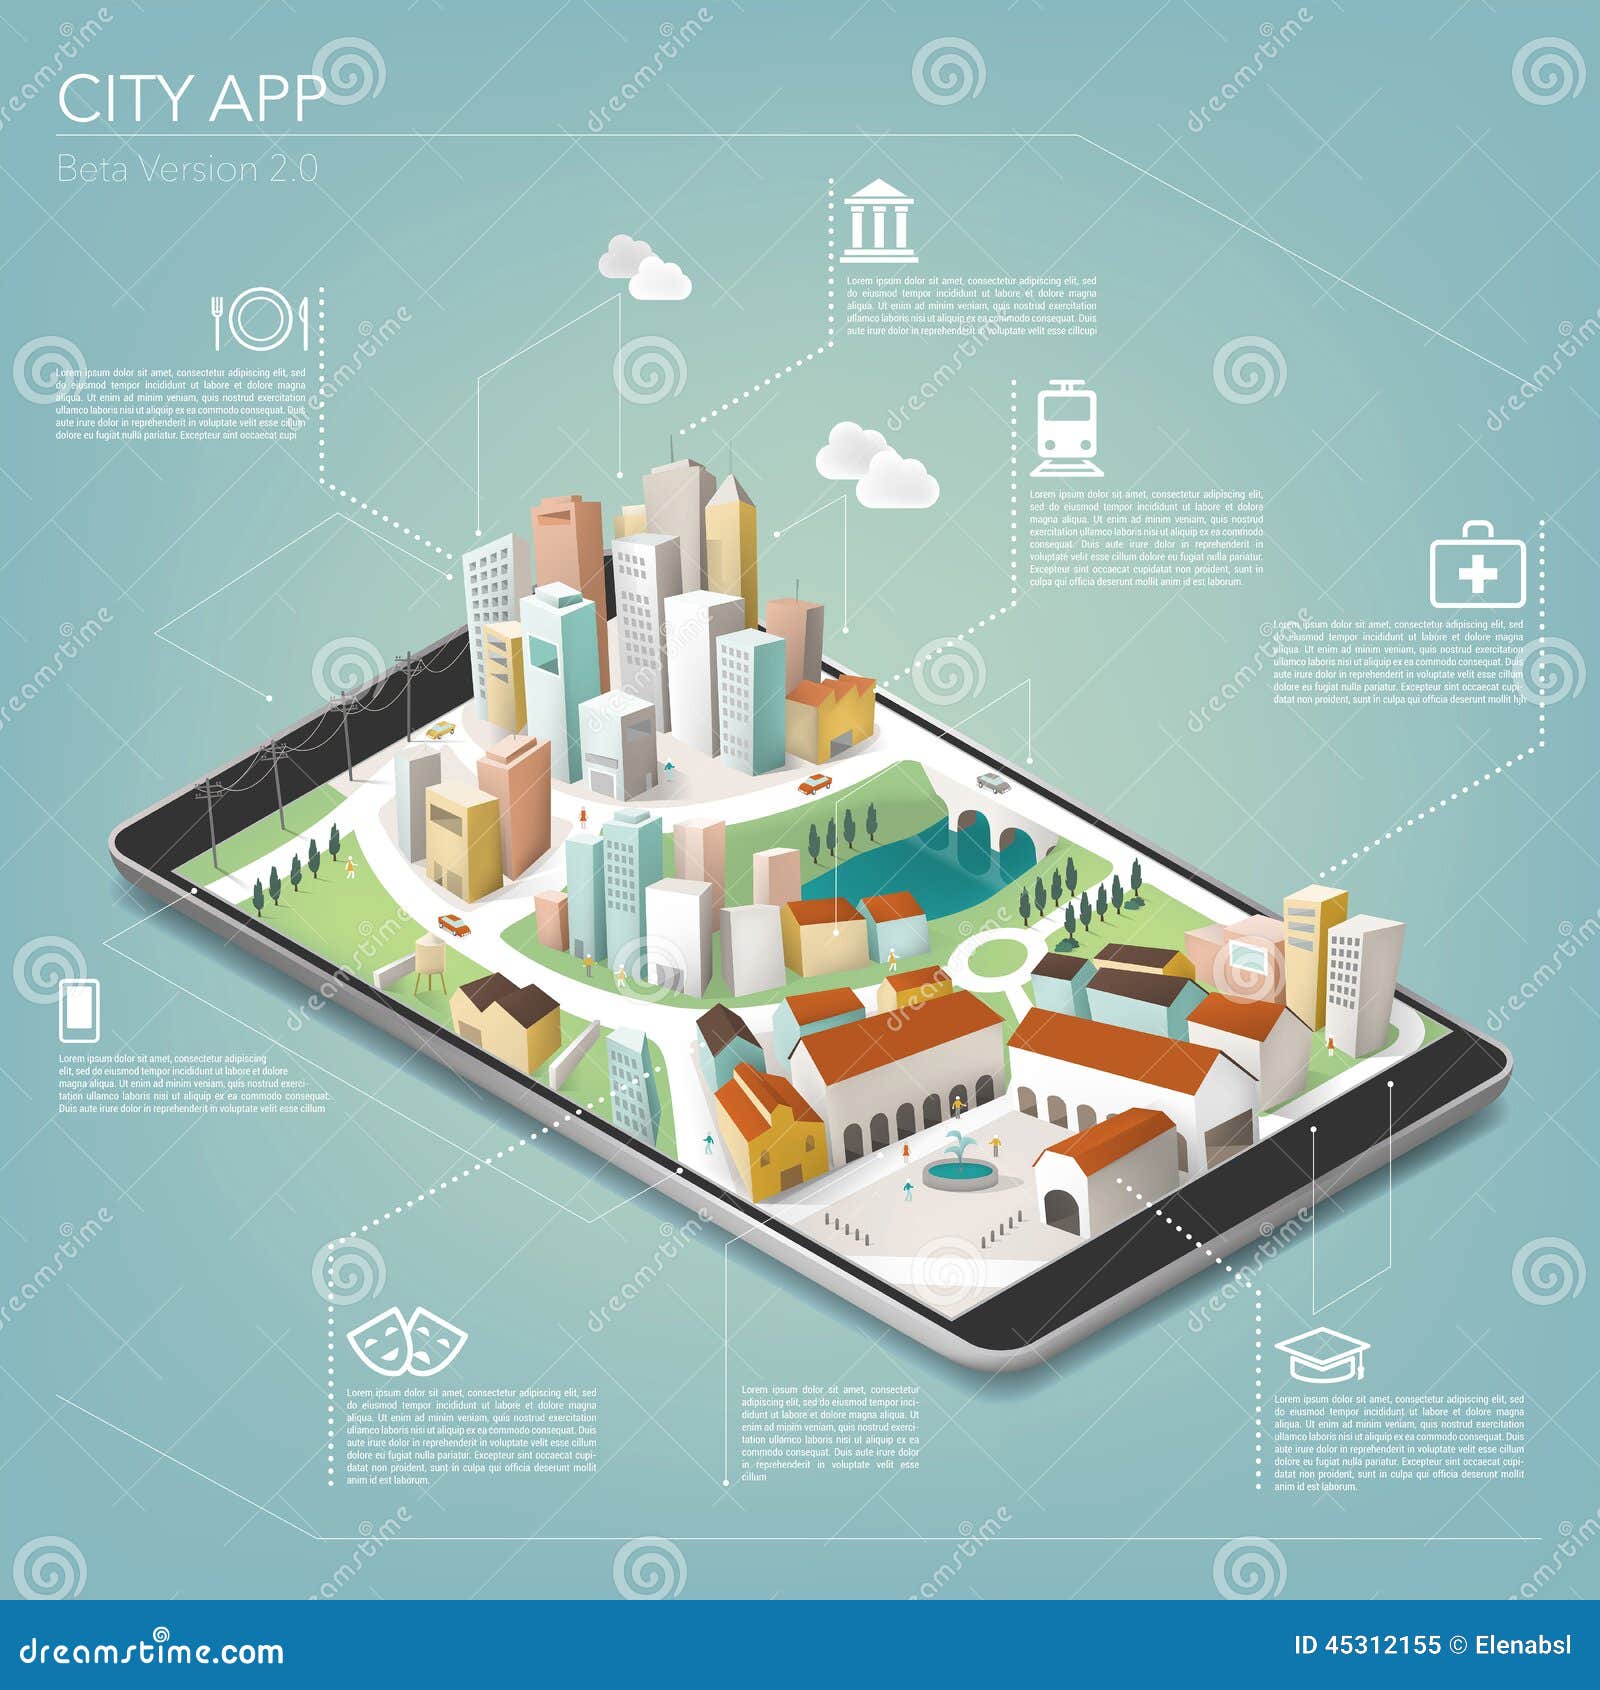 city app